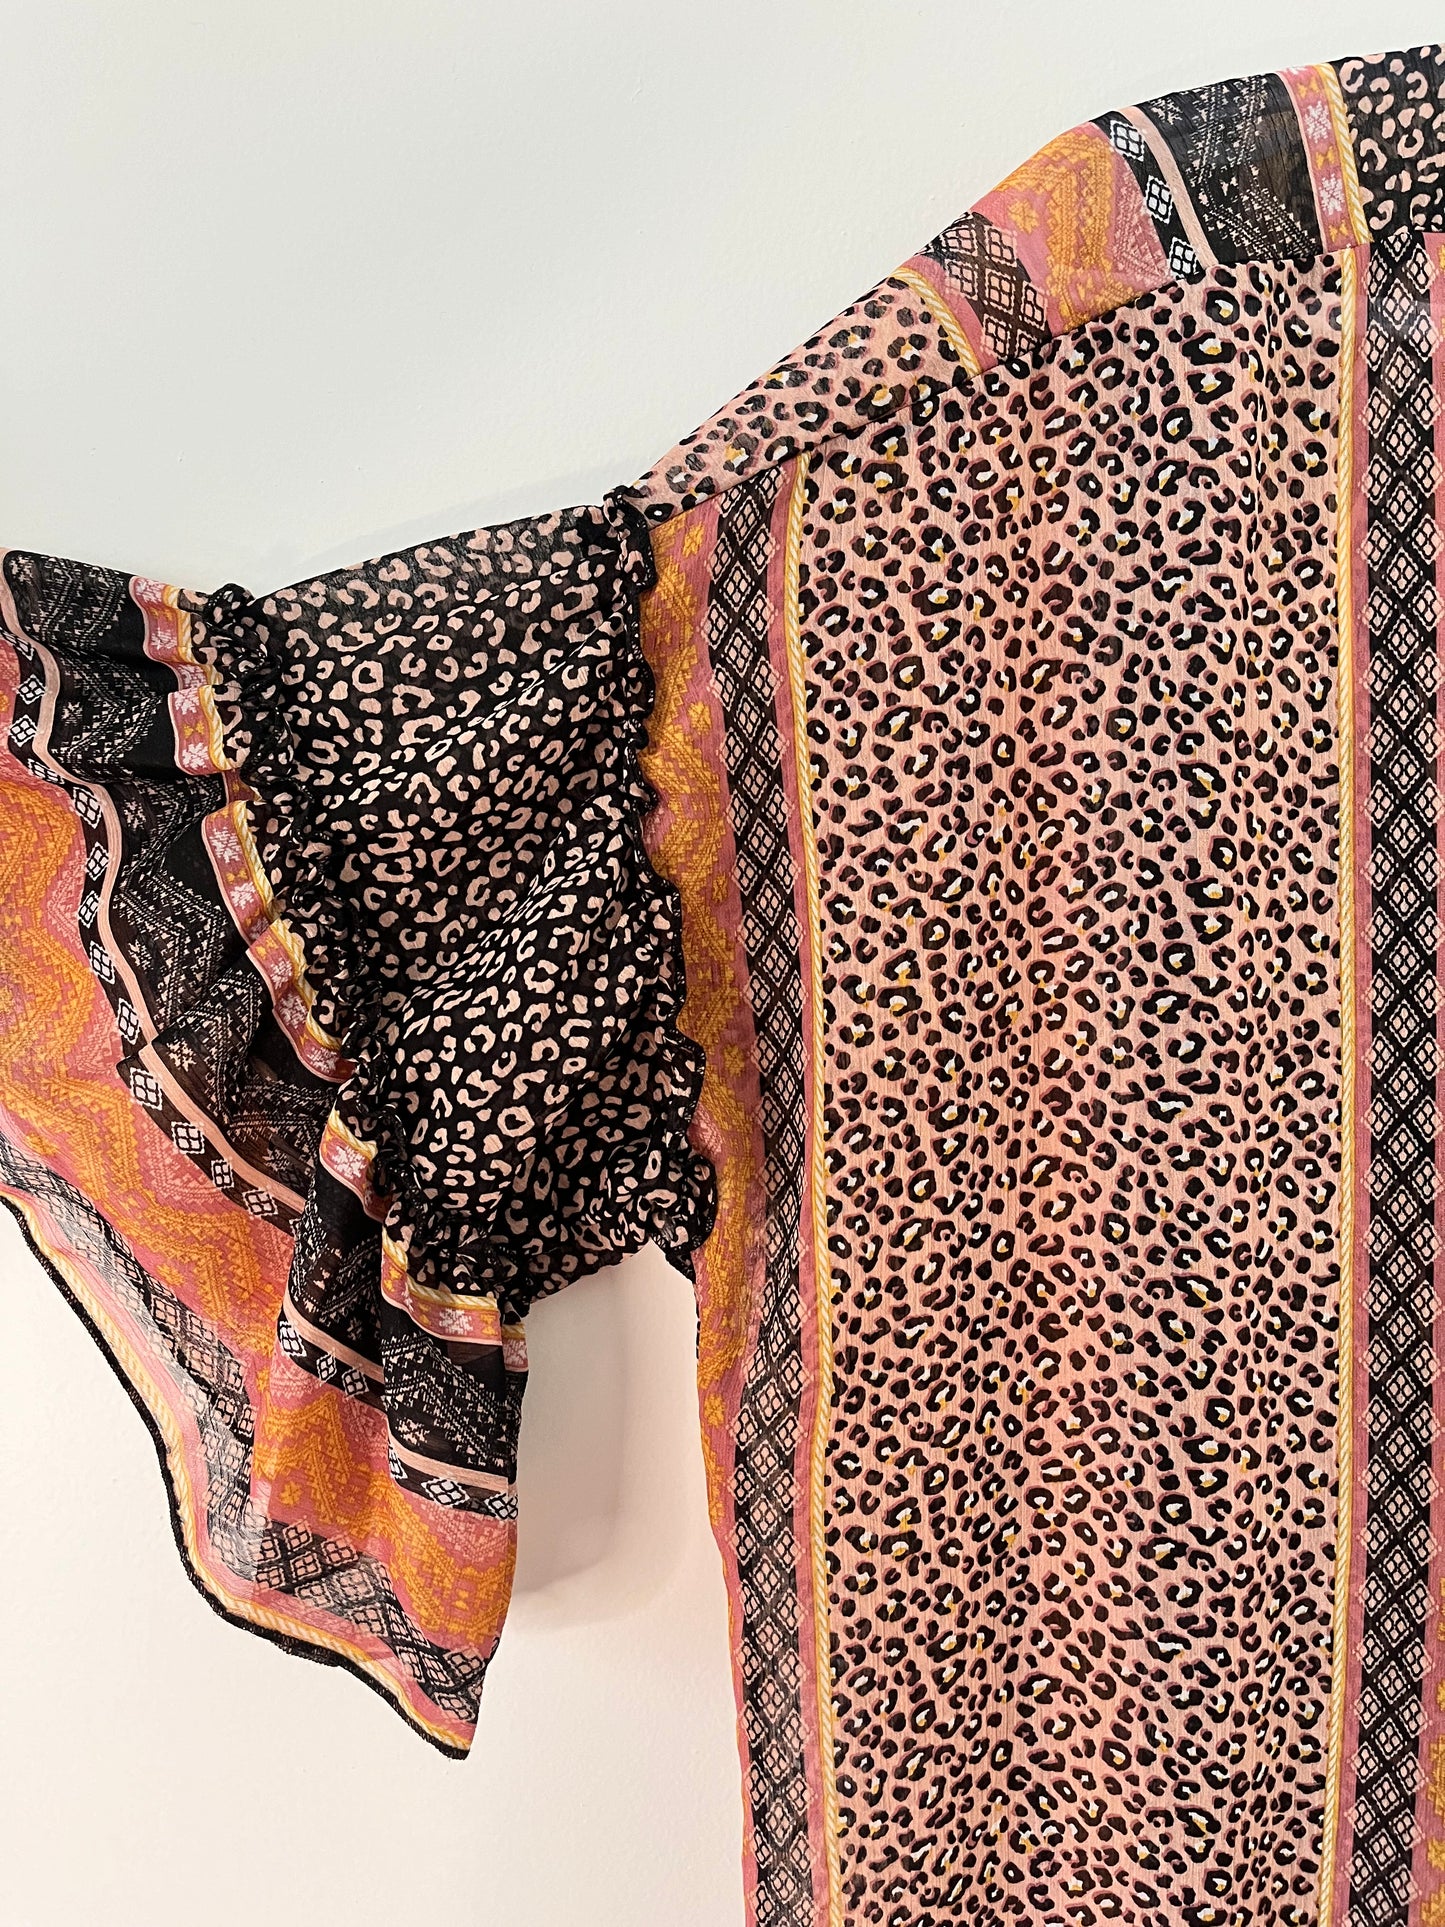 Leopard + Mixed Print Kimono-Style Blouse (Multi-Size)